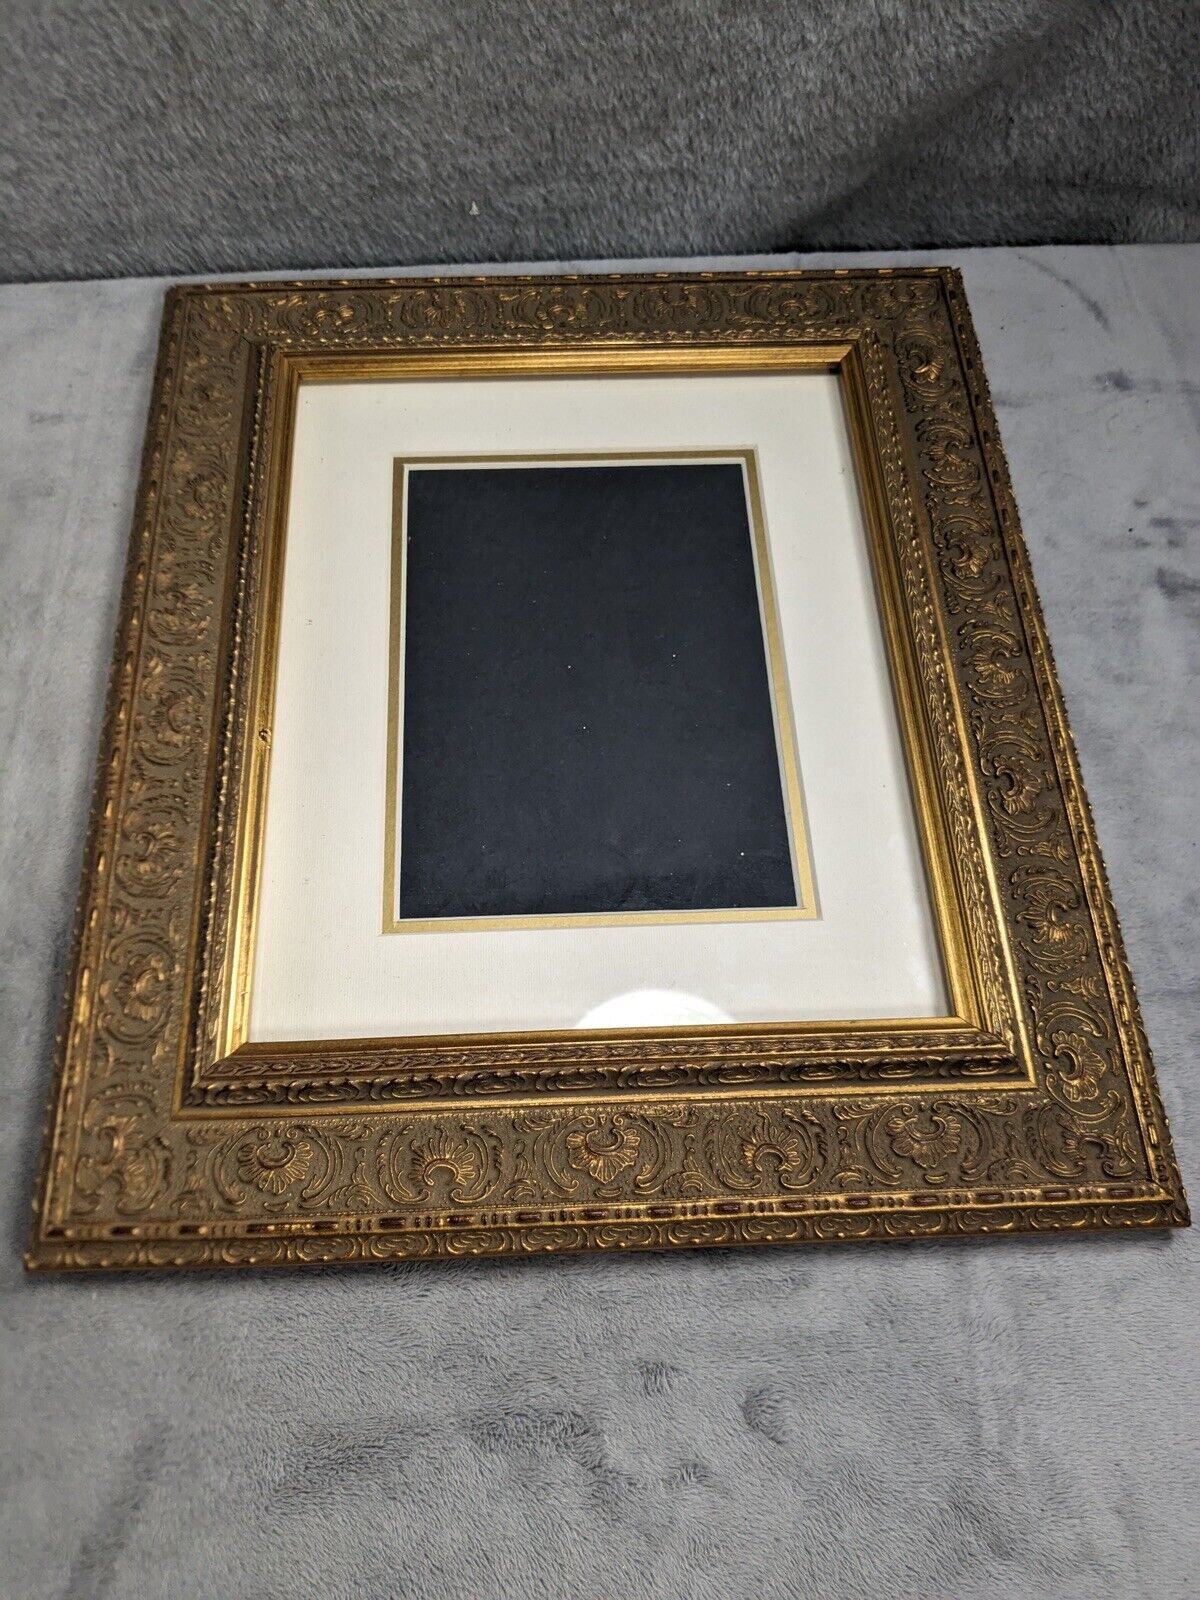 Vintage Ornate Gold Picture Frame Photo Frame 11.5x13.5” Holds 6x4.5”